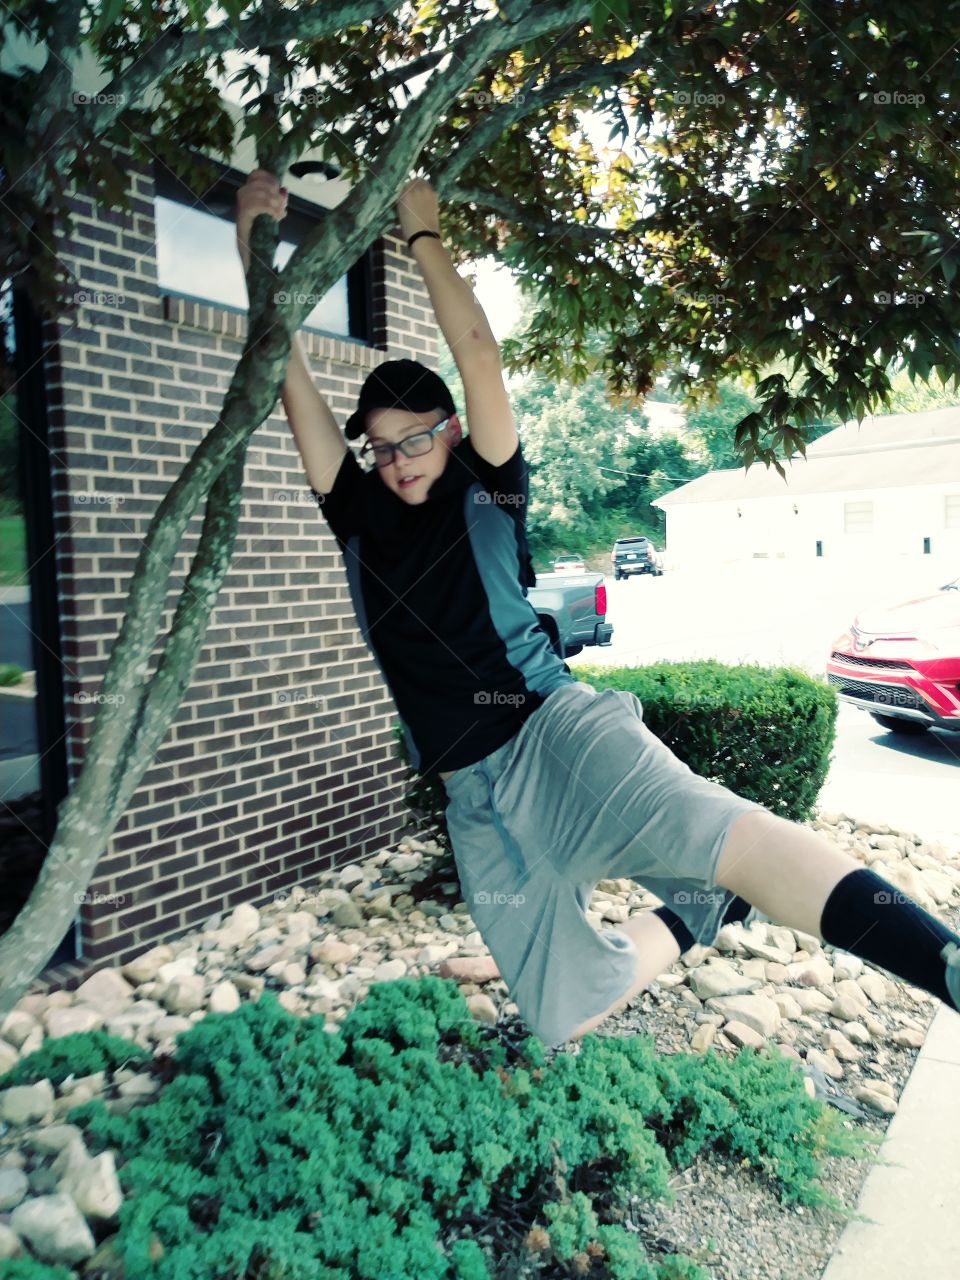 Boy swinging from a tree limb